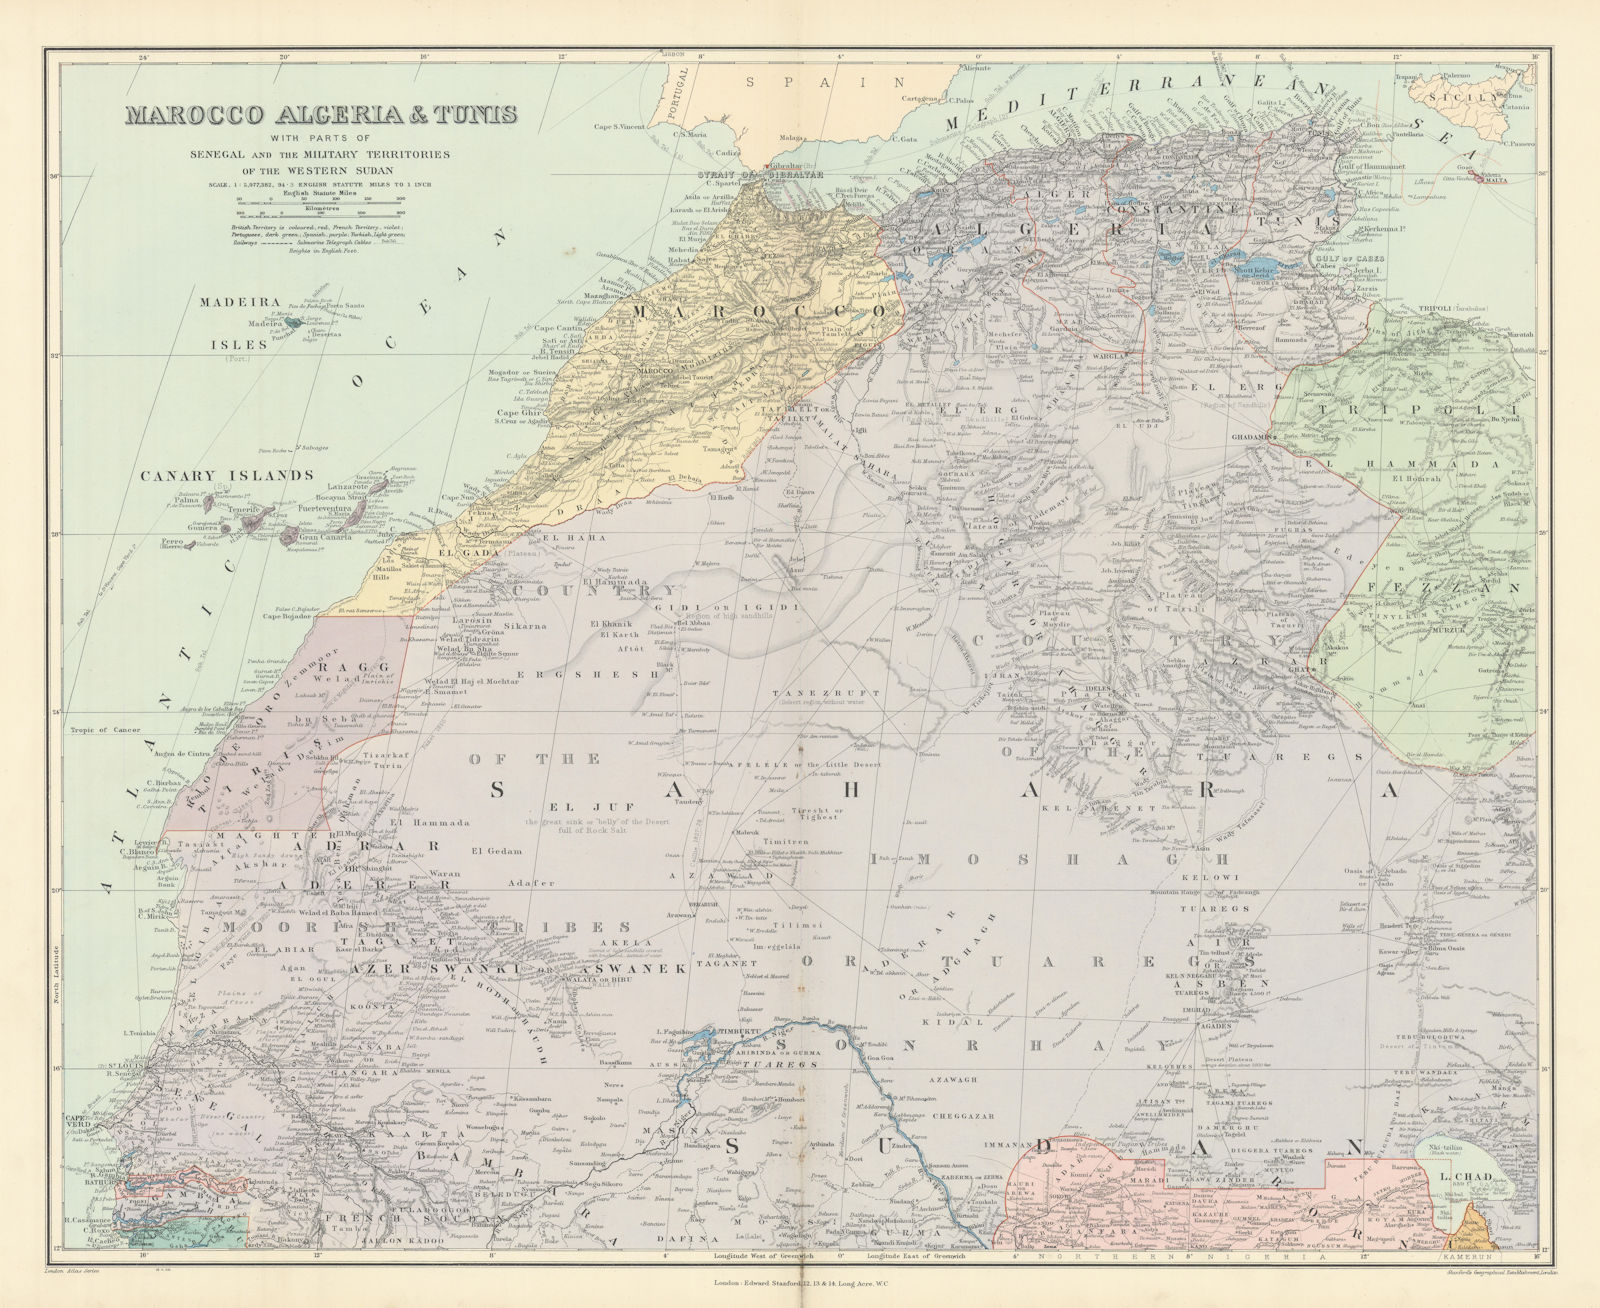 Northwest Africa. Morocco Sahara Rio do Oro Ain Sefra Gardaia. STANFORD 1904 map